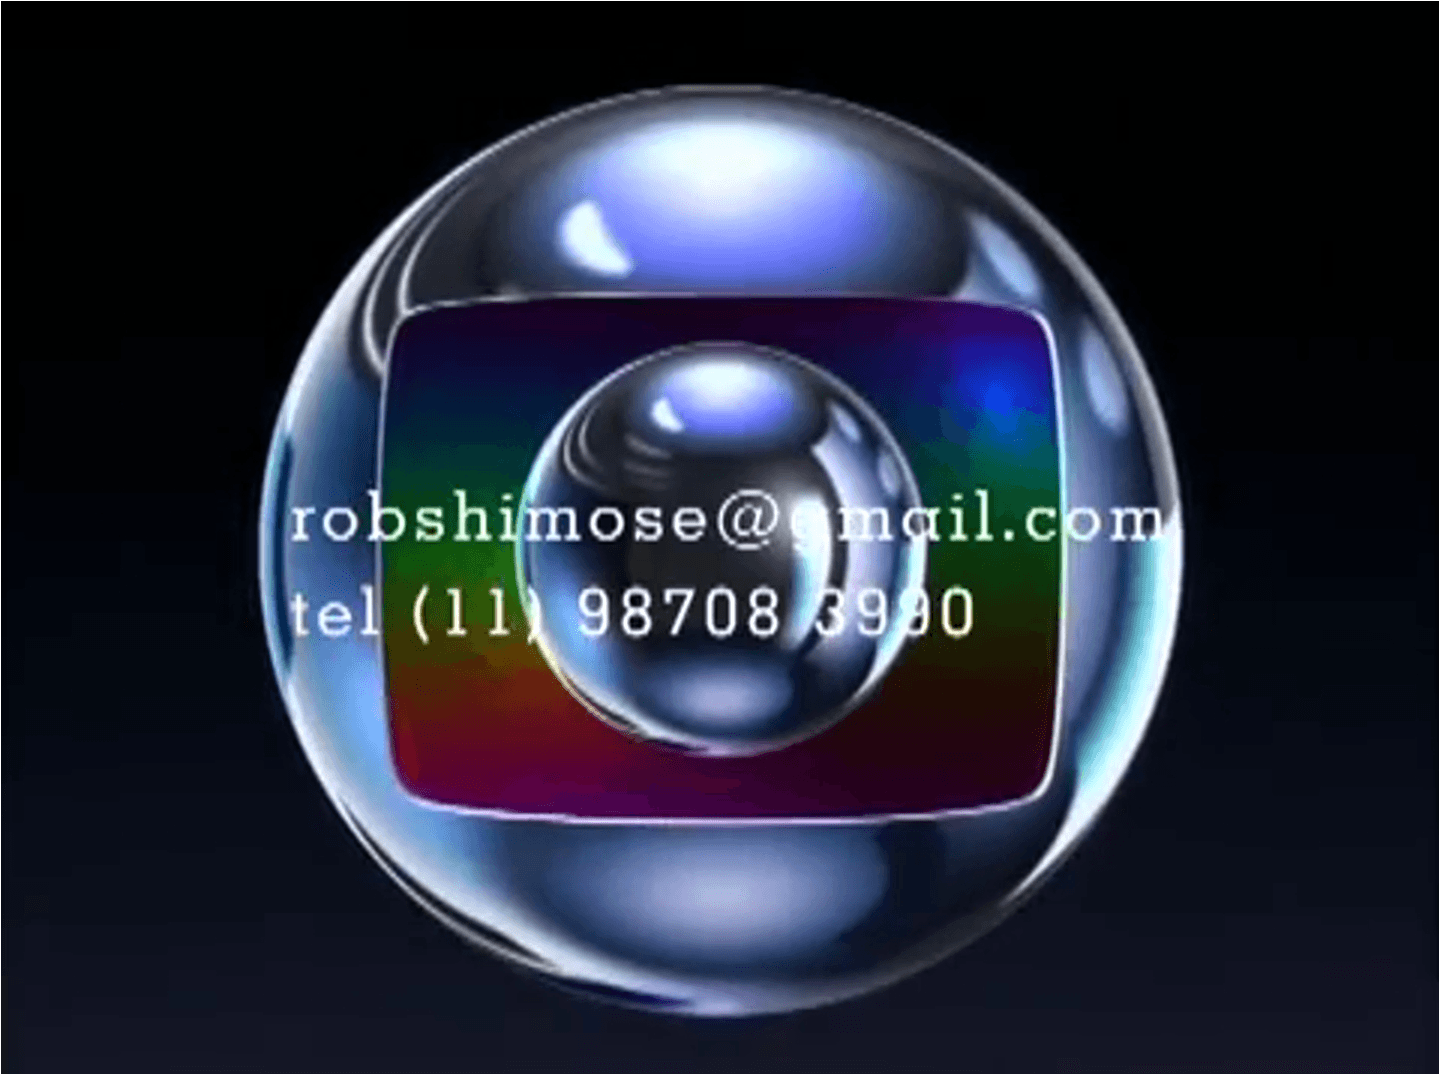 Silver Circle Red E Logo - Image - Rede Globo 1994 Lost Bumper.png | Logopedia | FANDOM powered ...